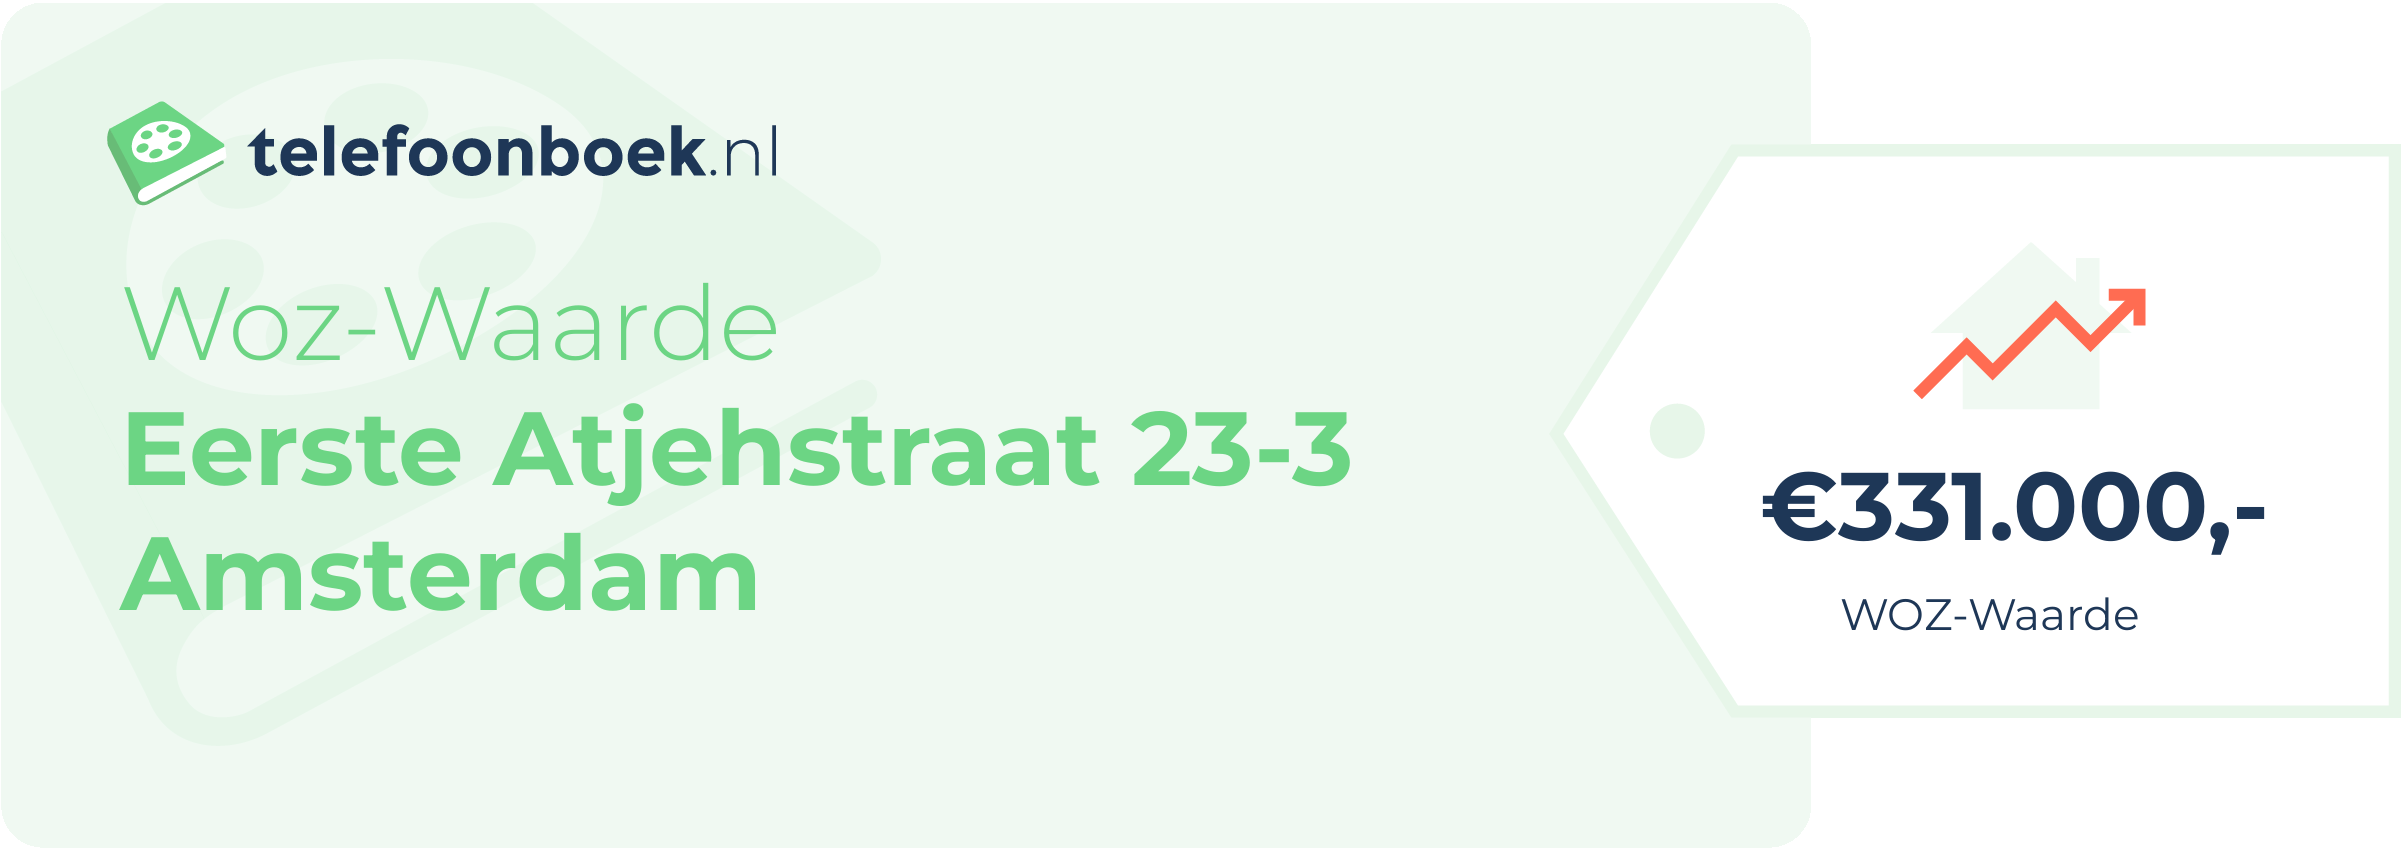 WOZ-waarde Eerste Atjehstraat 23-3 Amsterdam